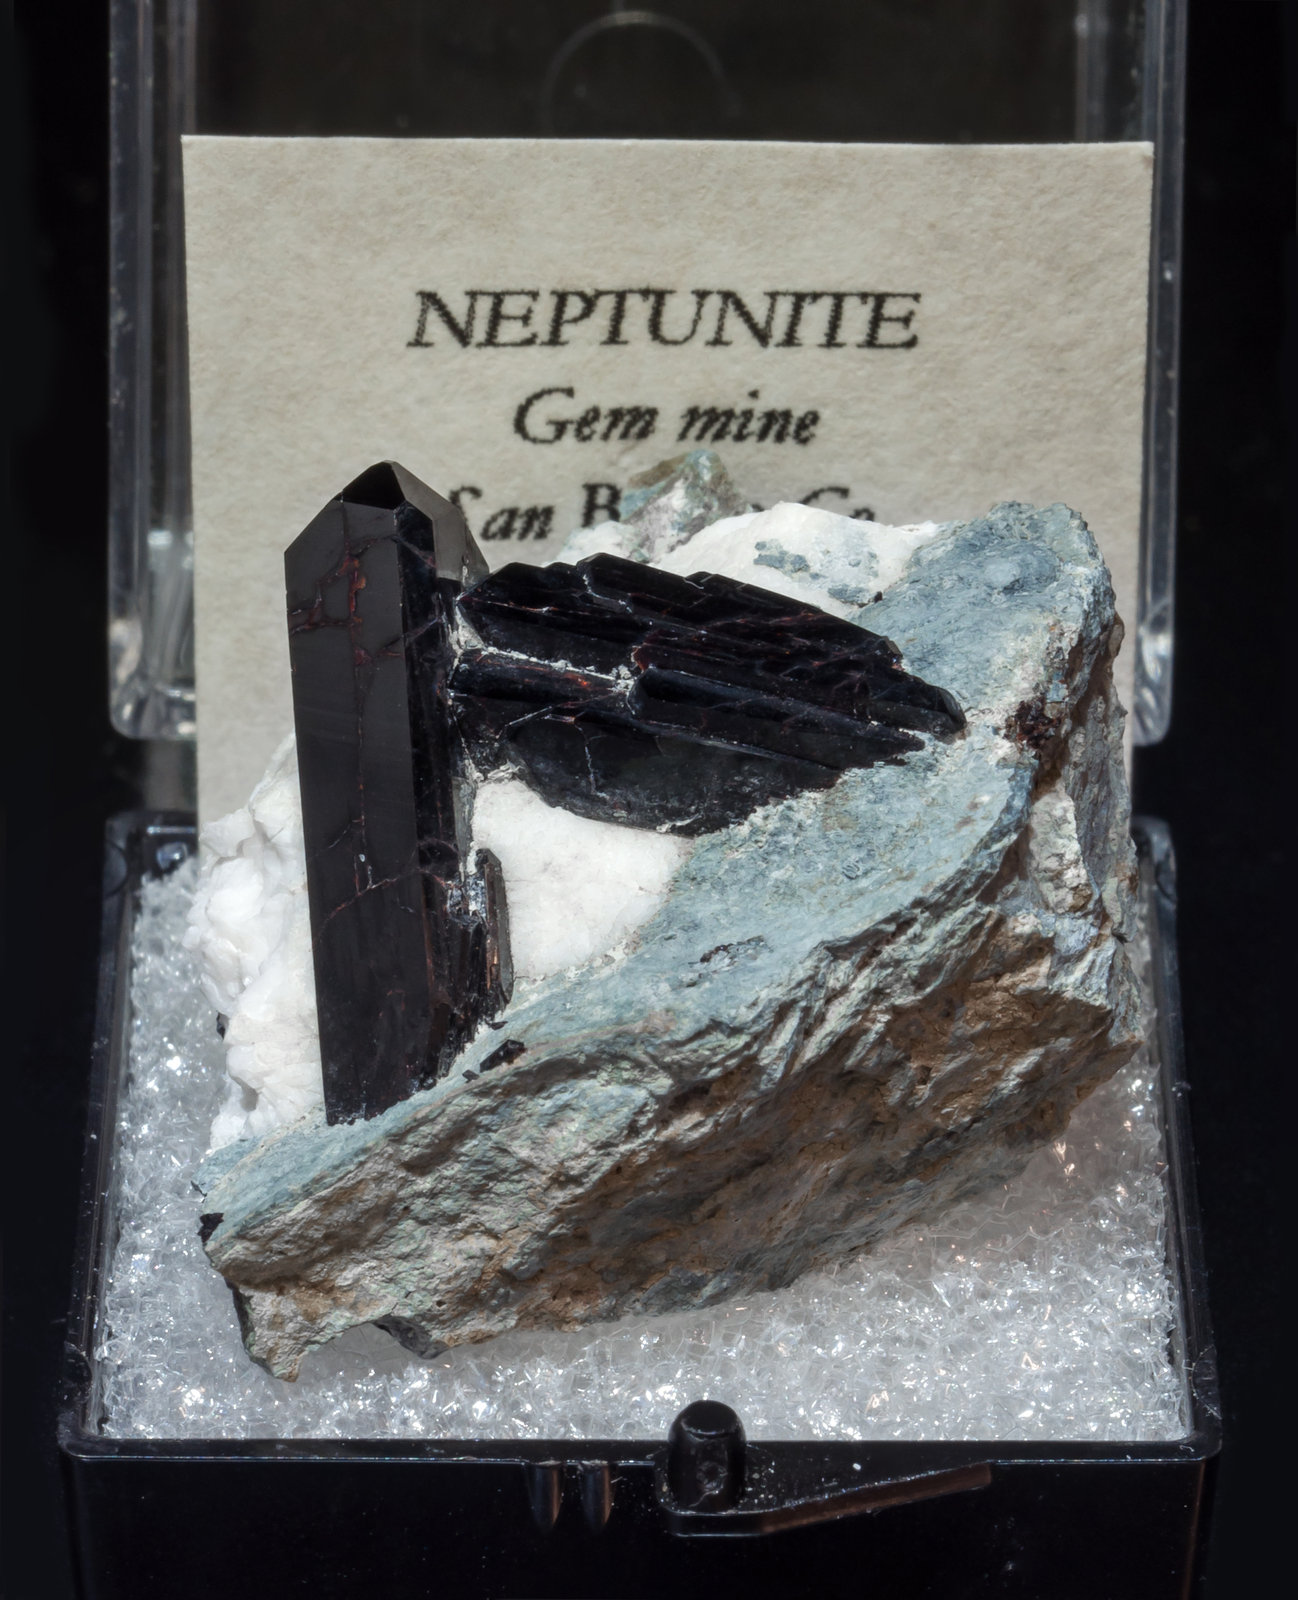 specimens/s_imagesAL4/Neptunite-TM47AL4f1.jpg